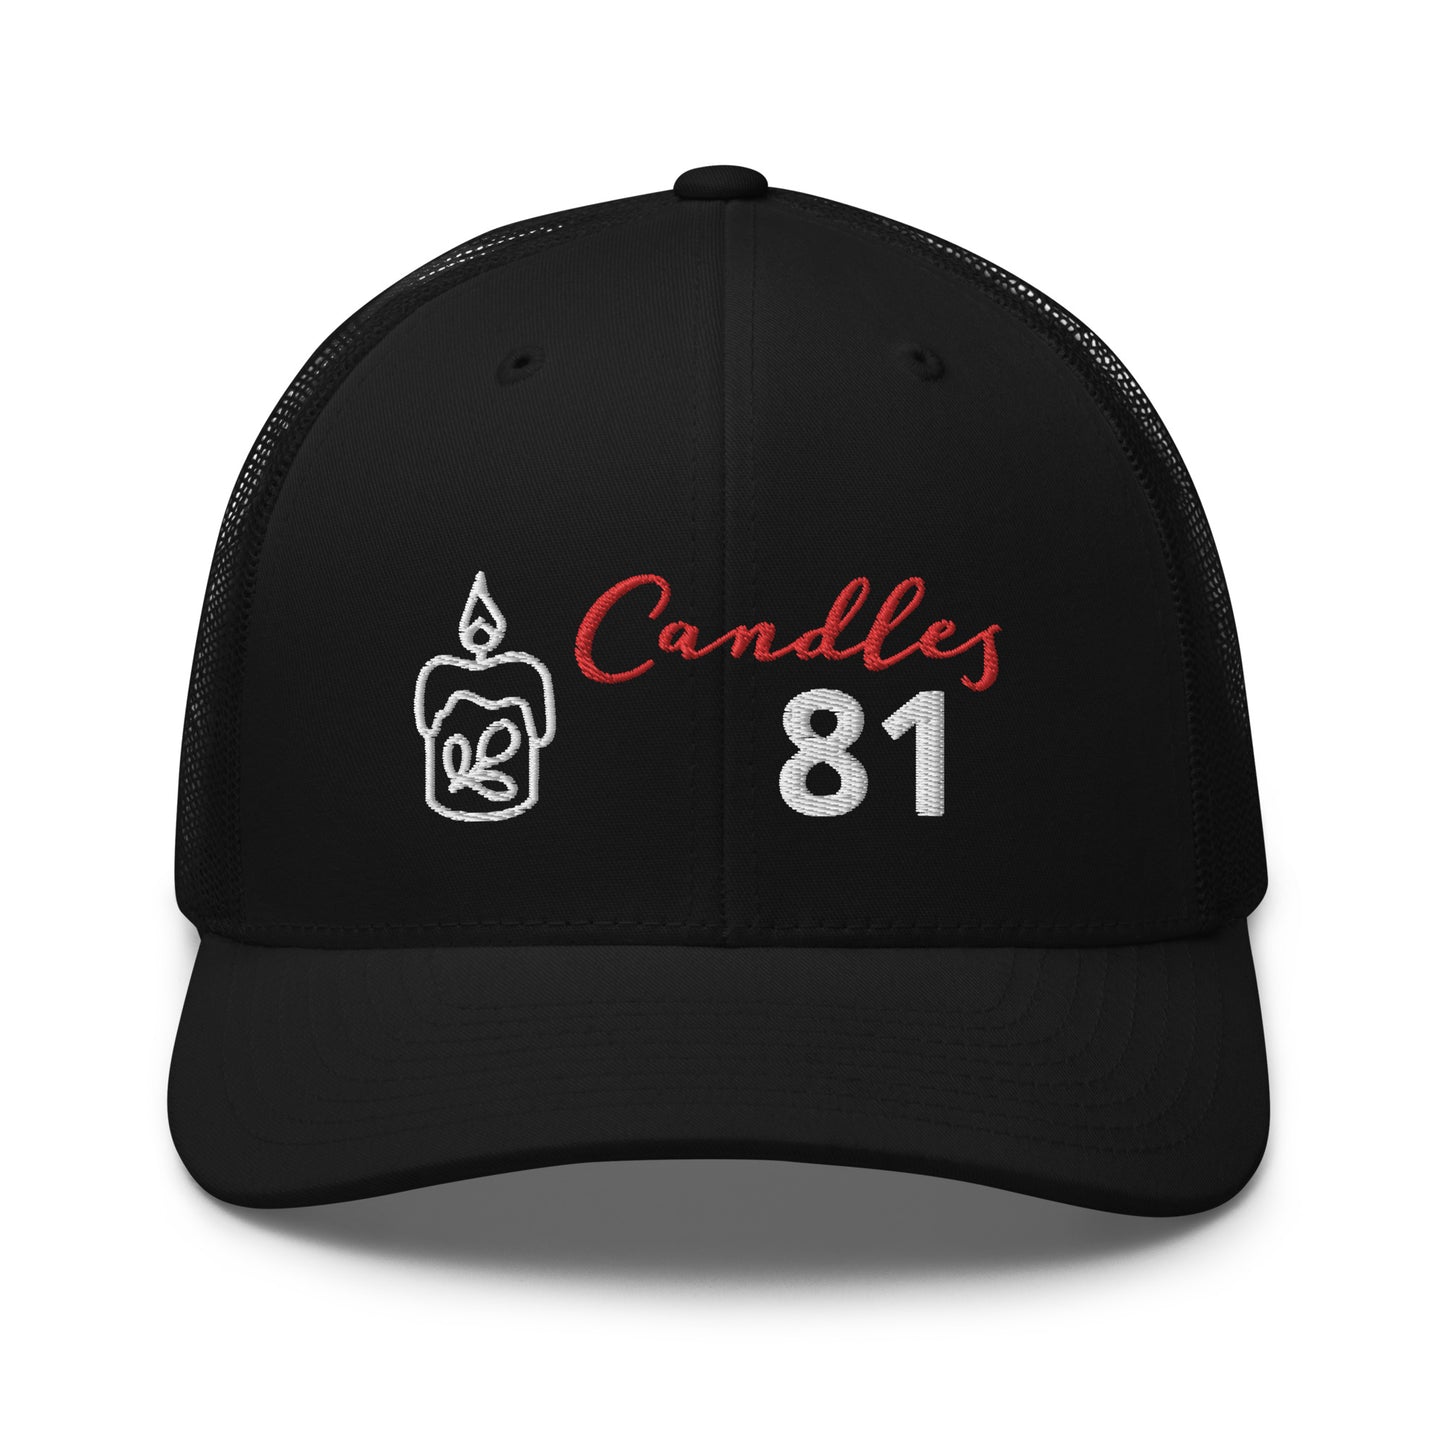 Candles81 Trucker Cap